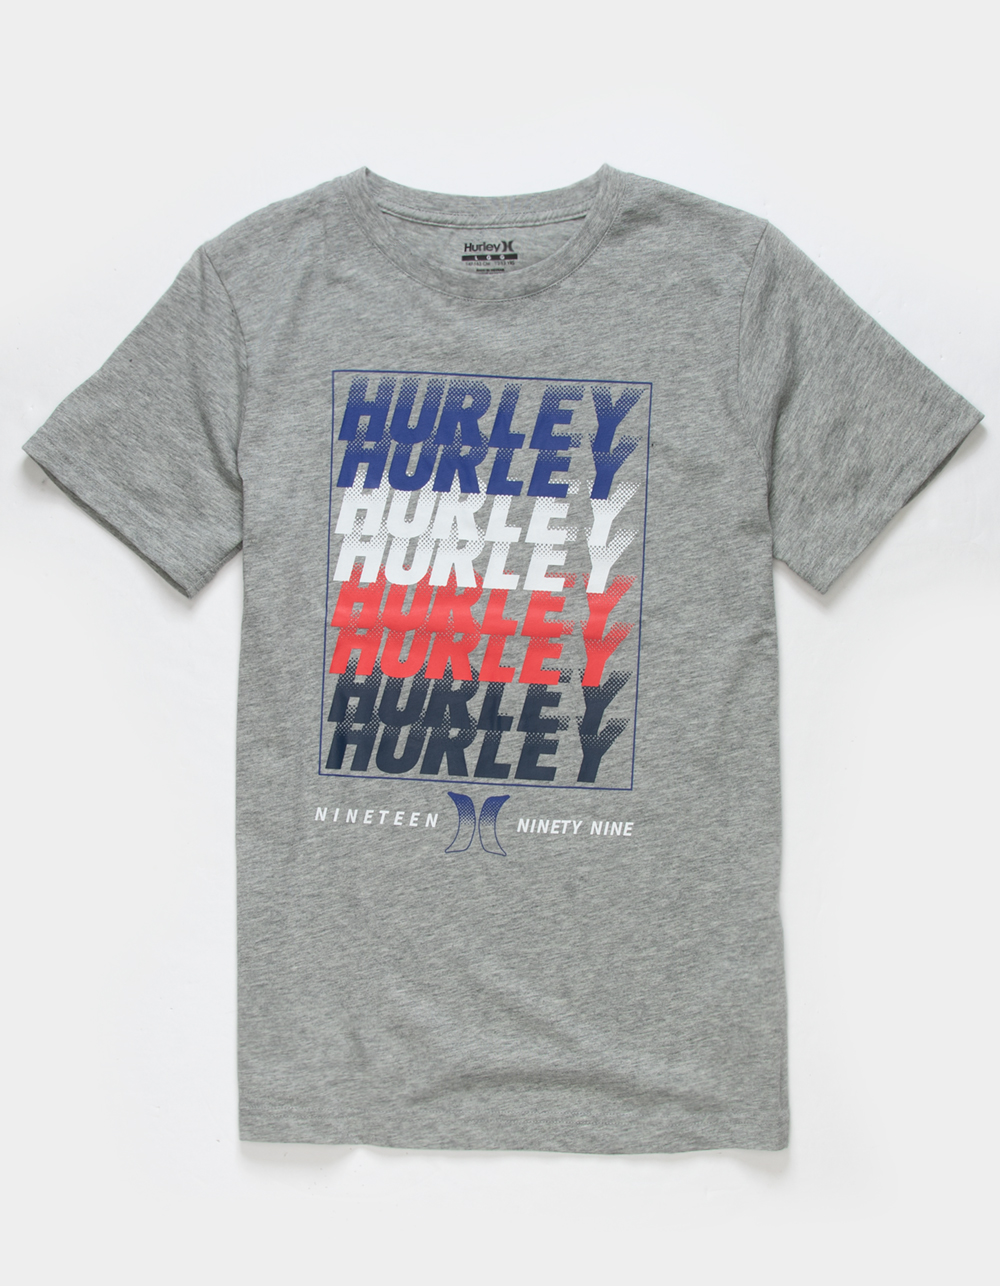 Hurley Clothing: Shirts, Hats, & More | Tillys